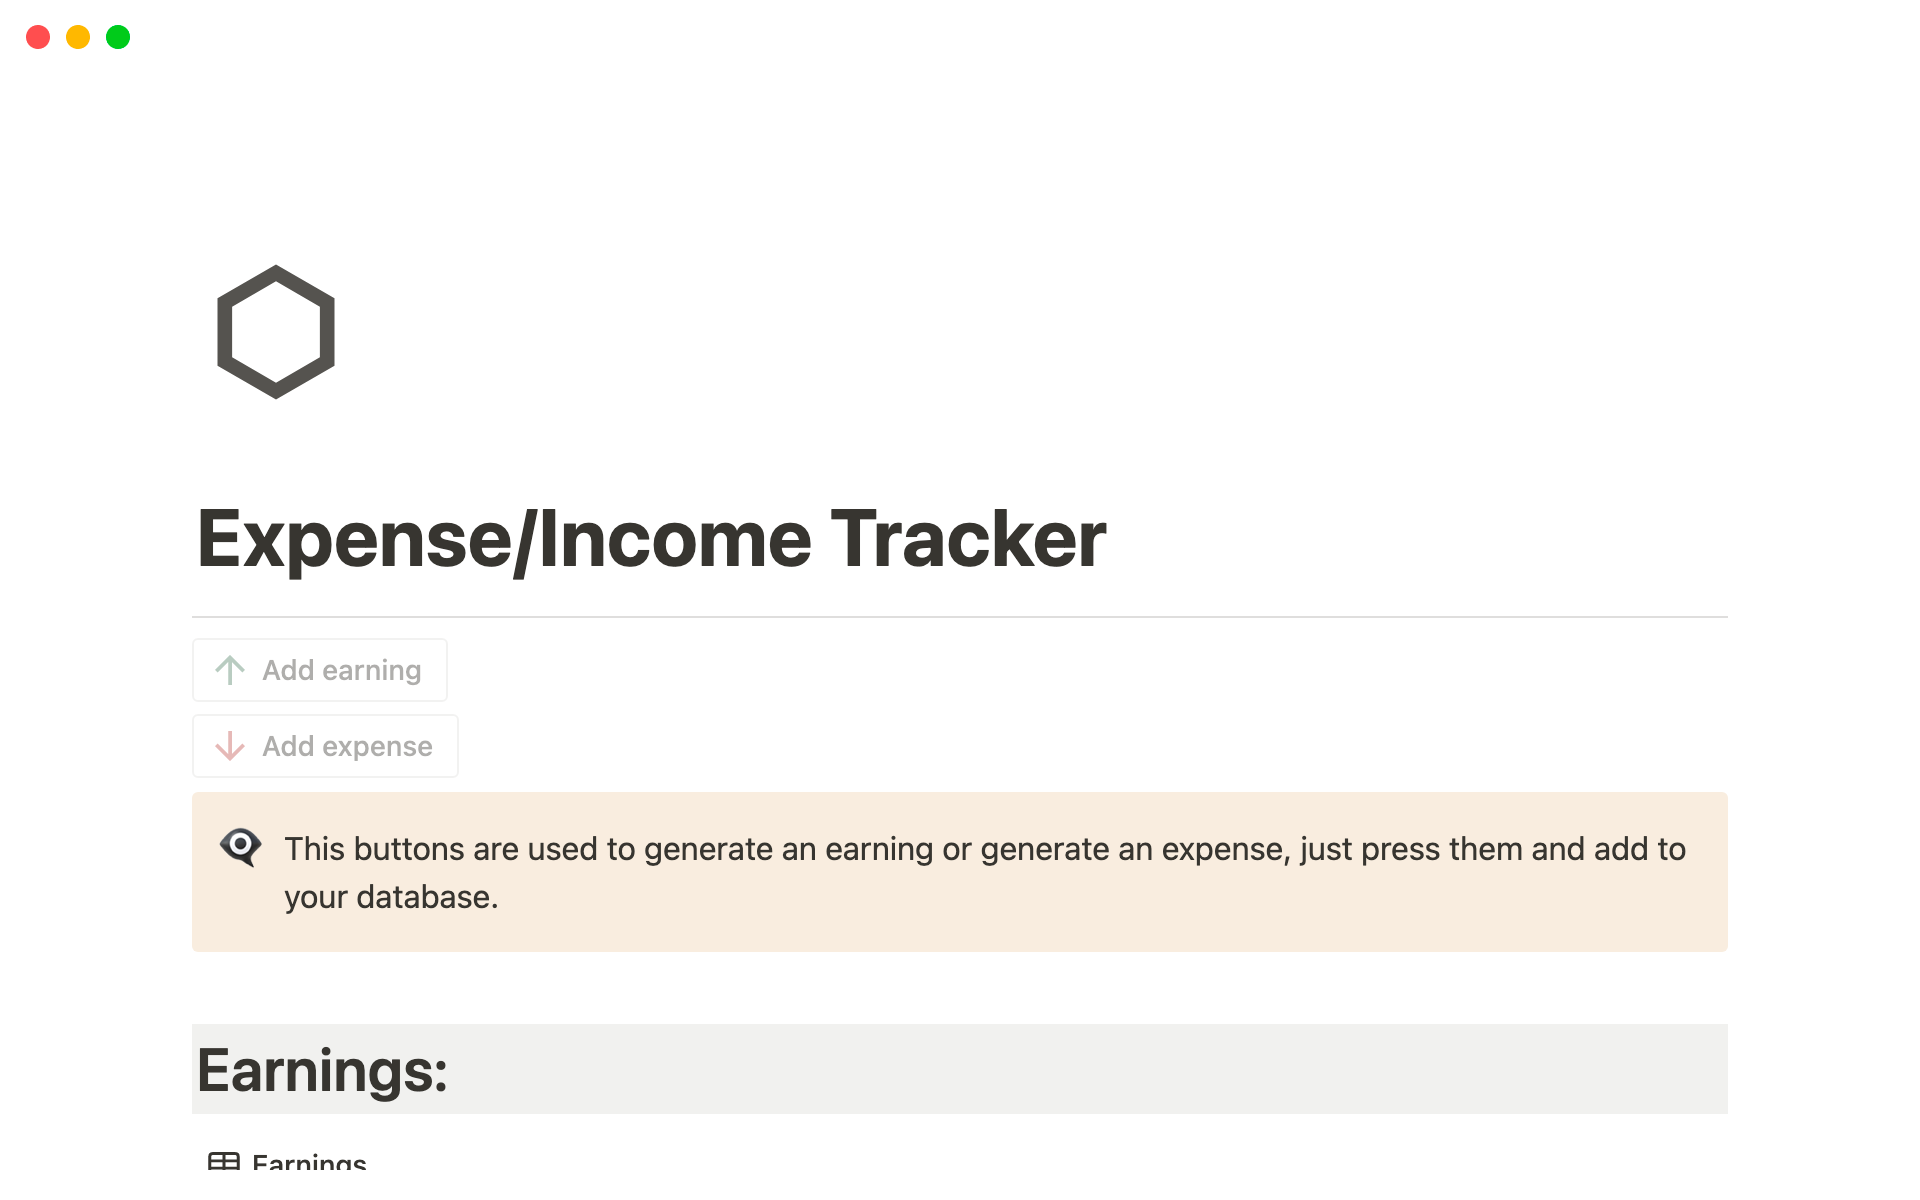 Vista previa de plantilla para Expense/Income tracker